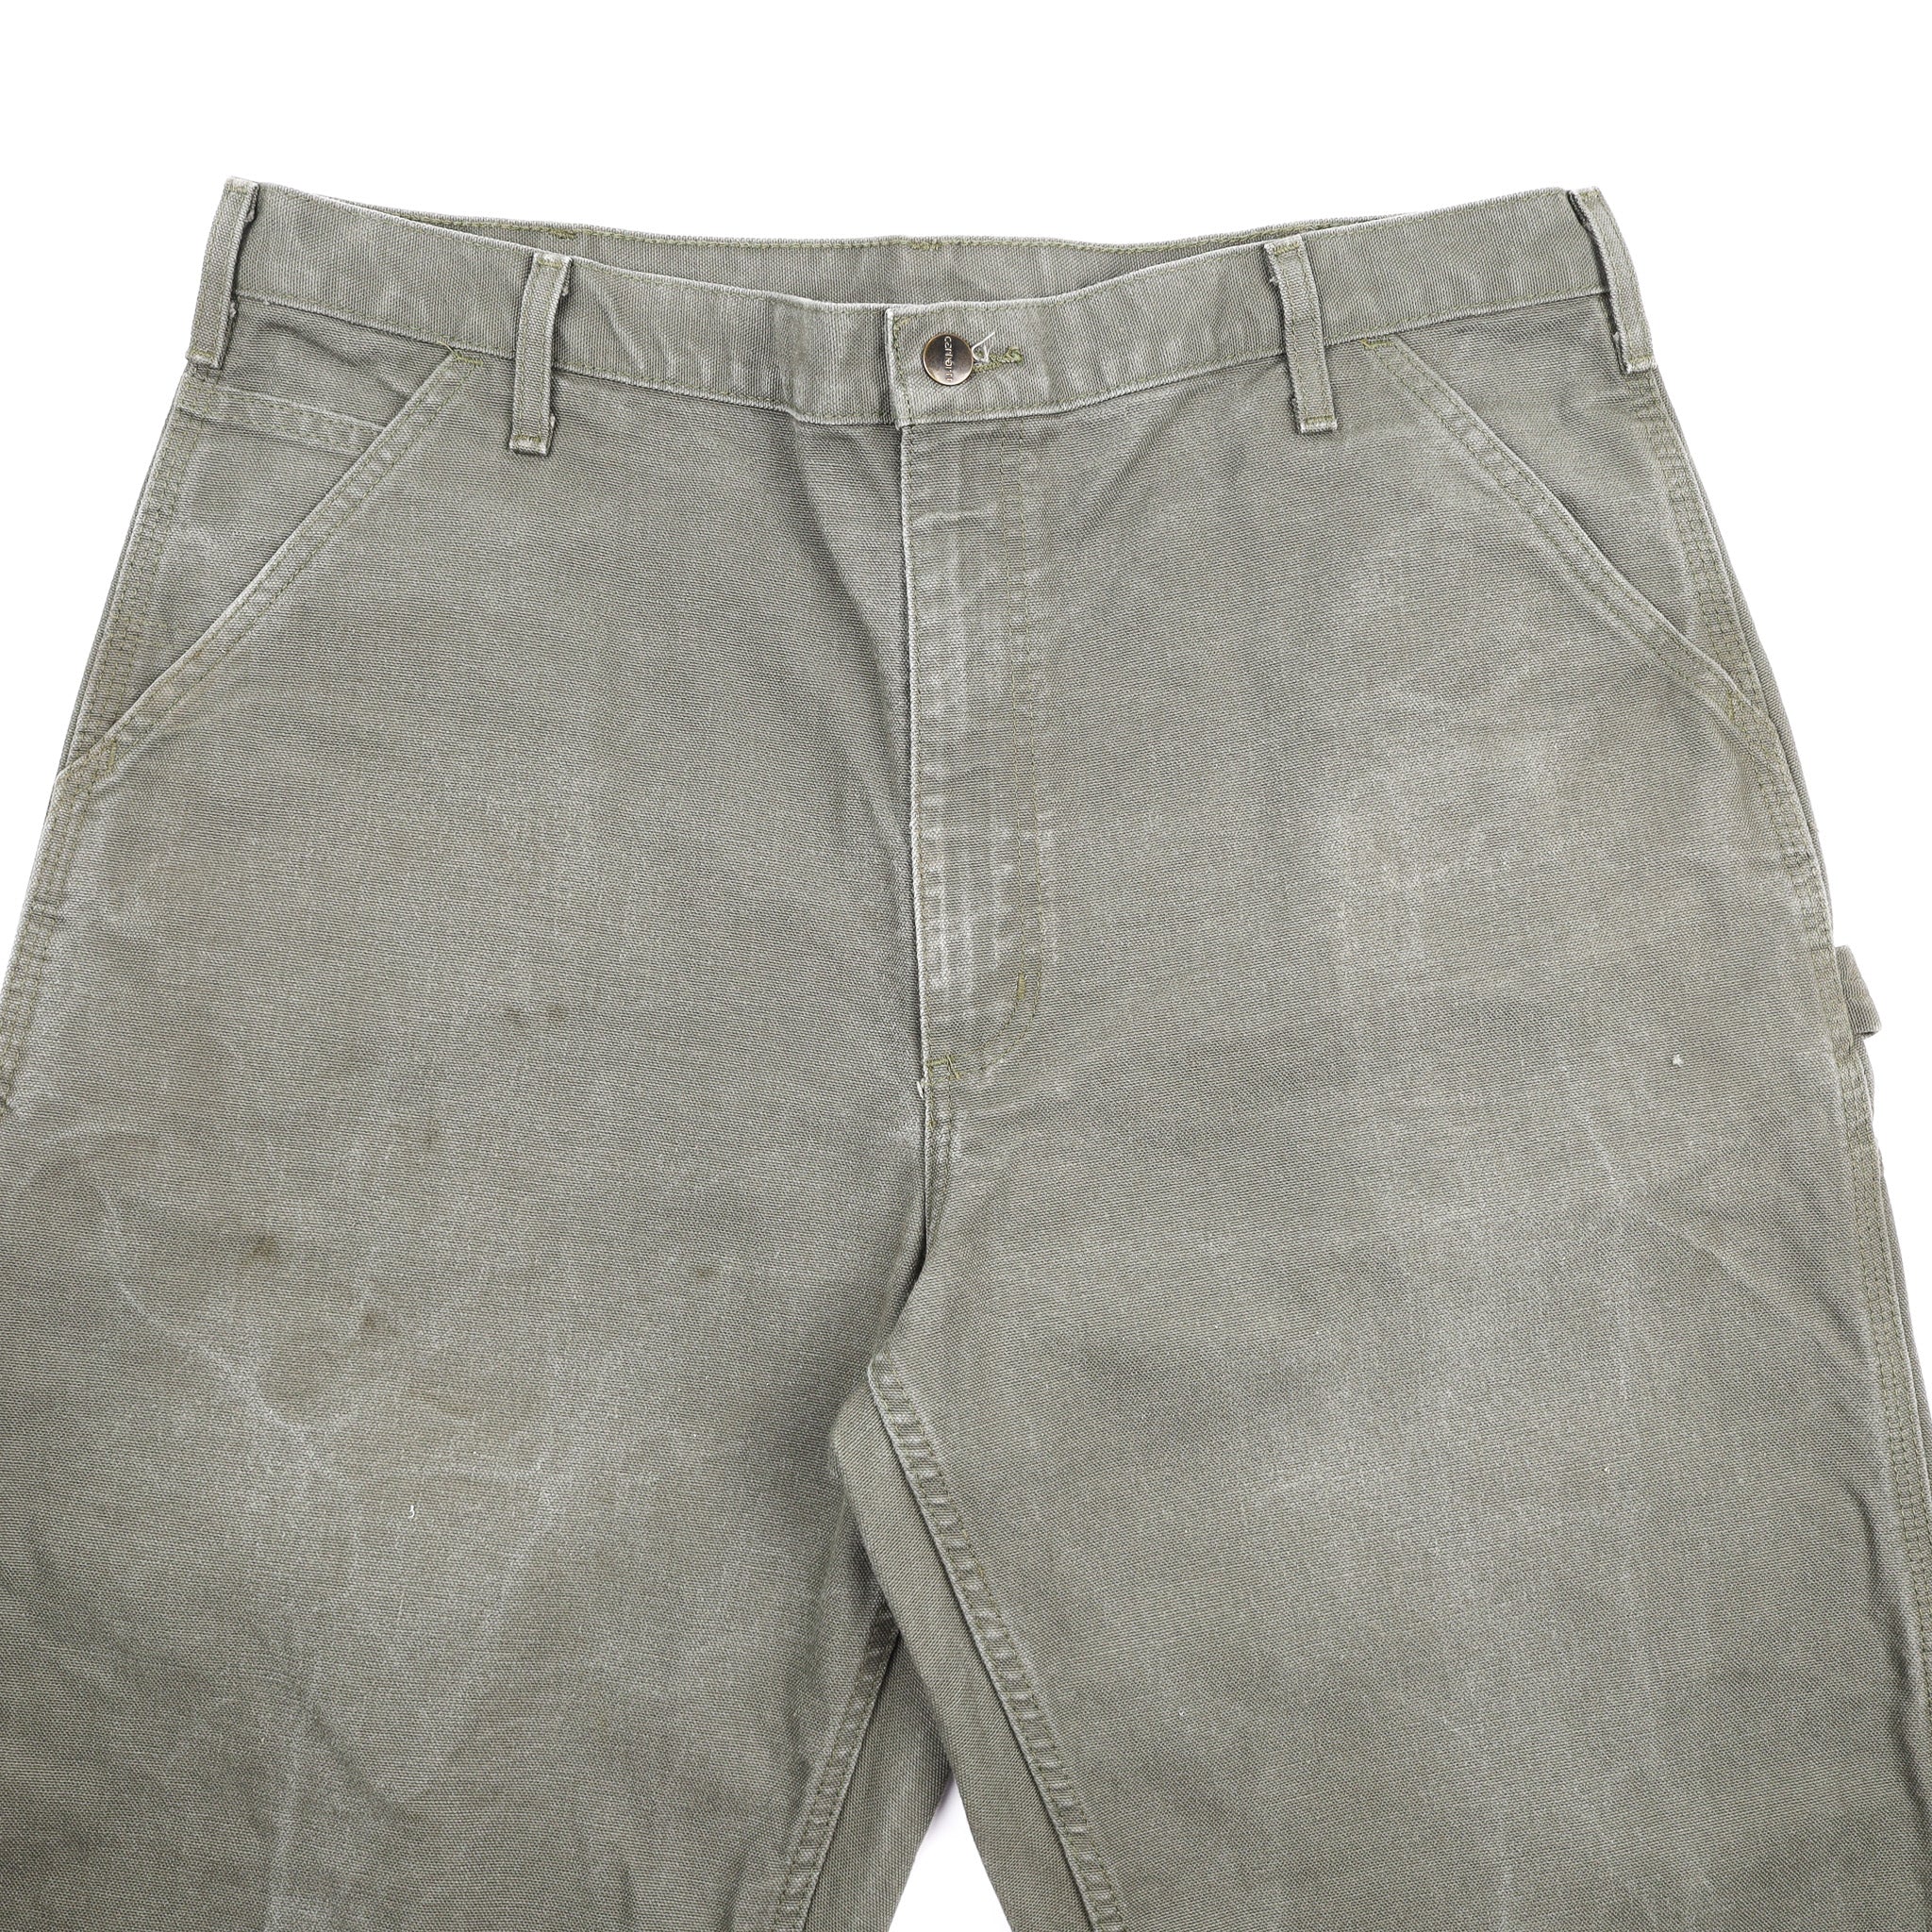 Vintage Carhartt Carpenter Workwear Pants - XL